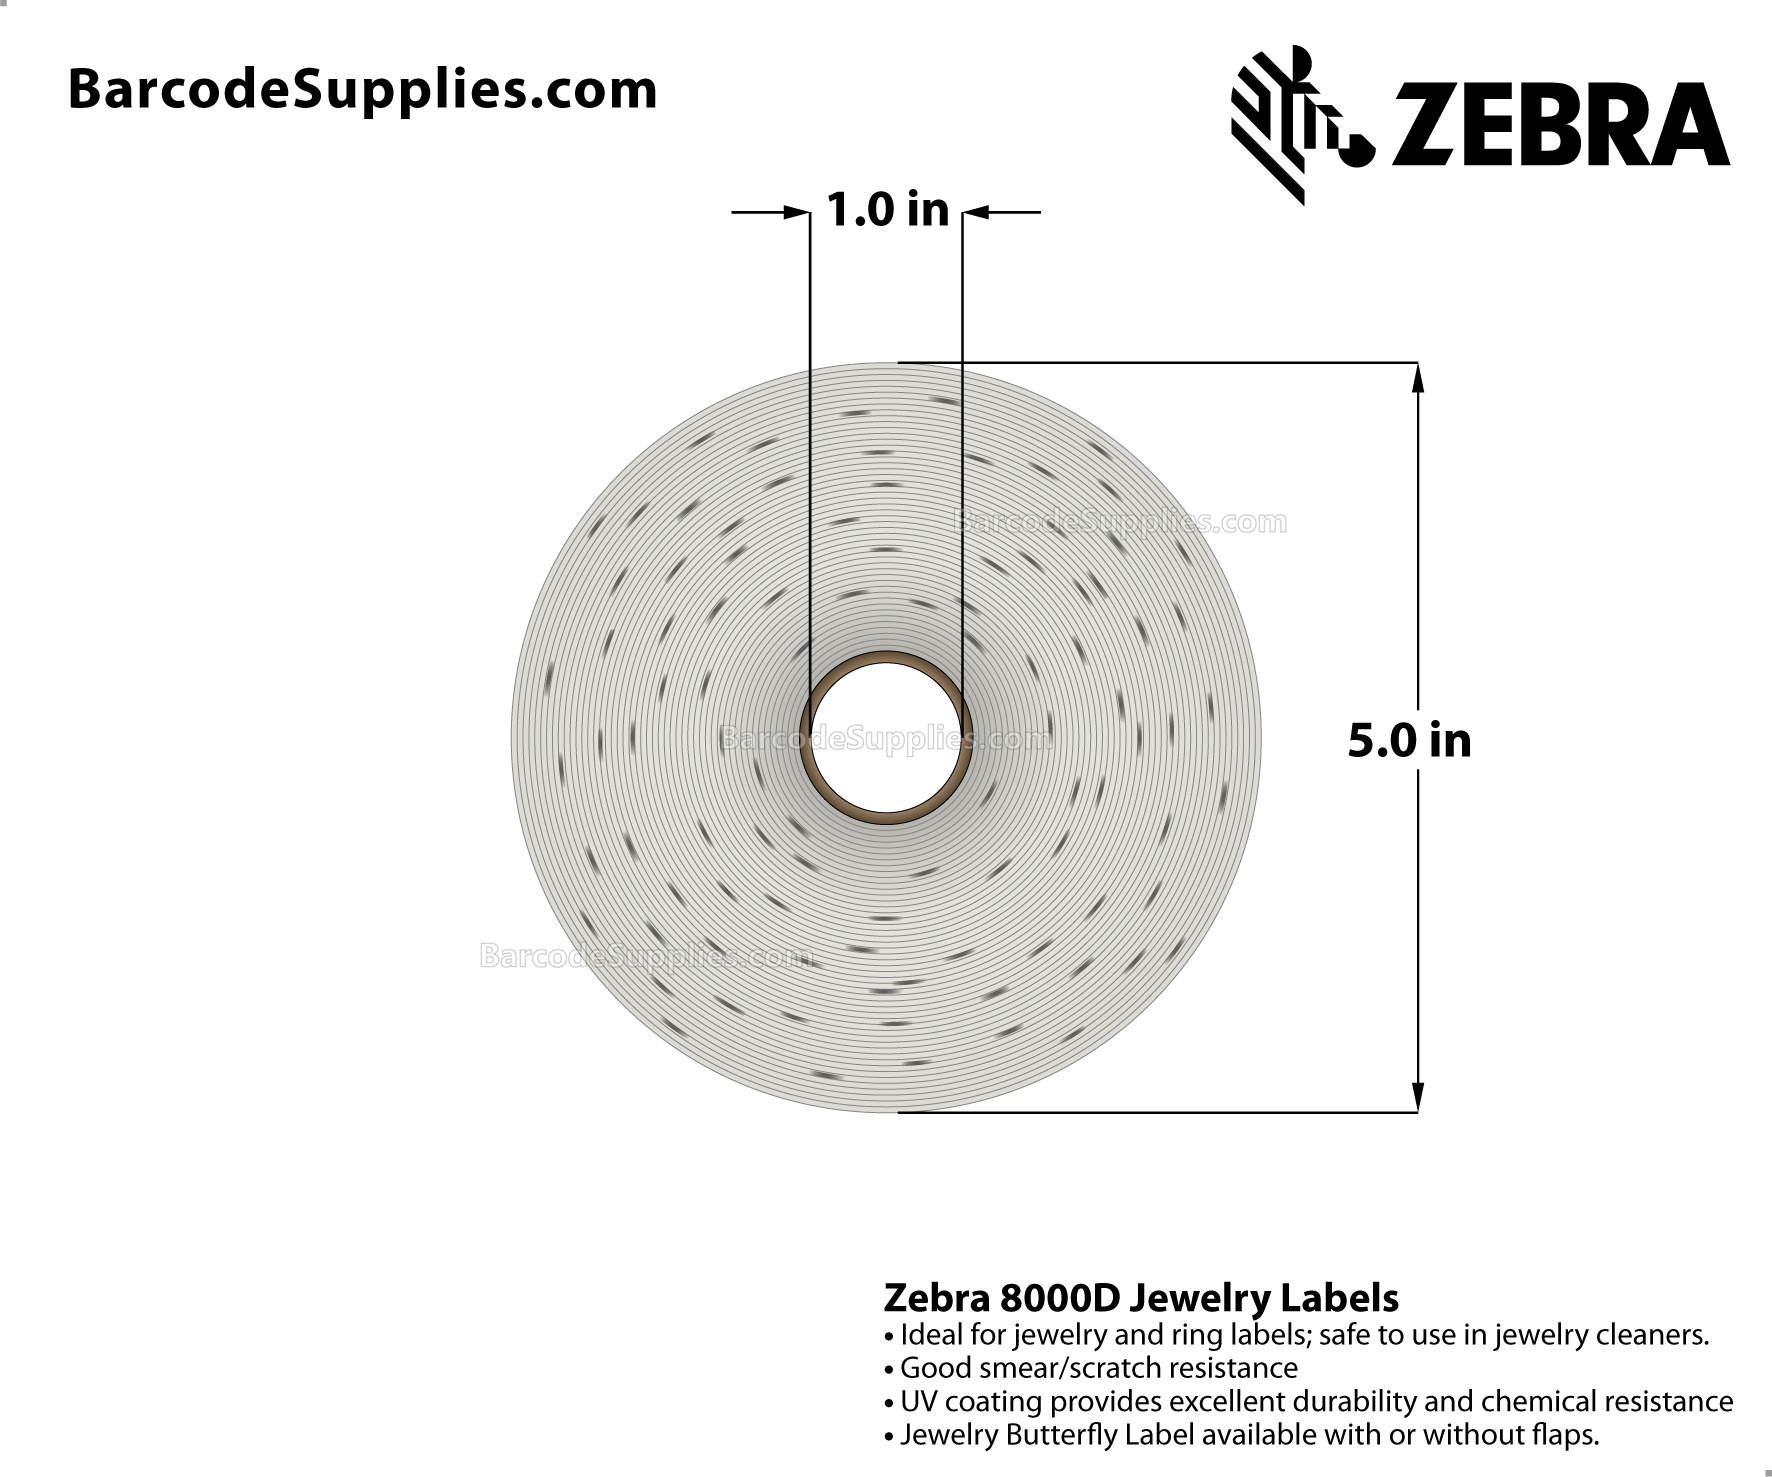 Zebra 2.20 x 0.50 Direct Thermal Labels 8000D Jewelry (Jewelry Butterfly  Label w/o flaps) 1